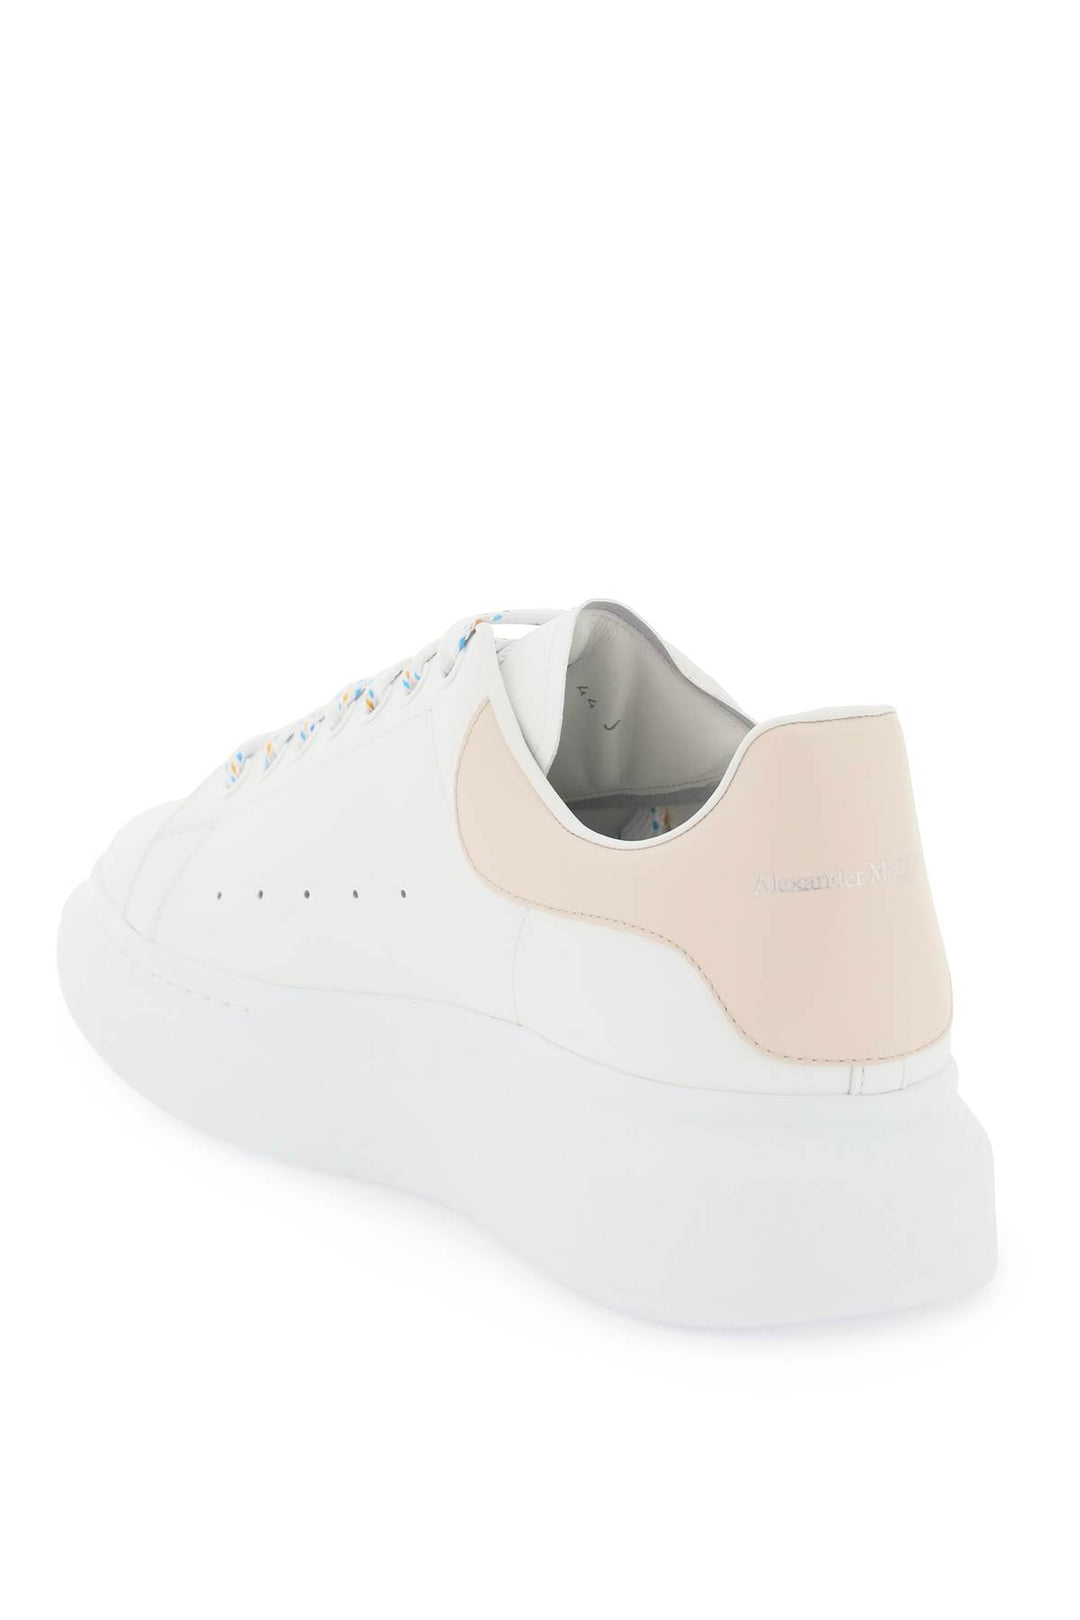 Alexander Mcqueen Oversized Sneakers   White